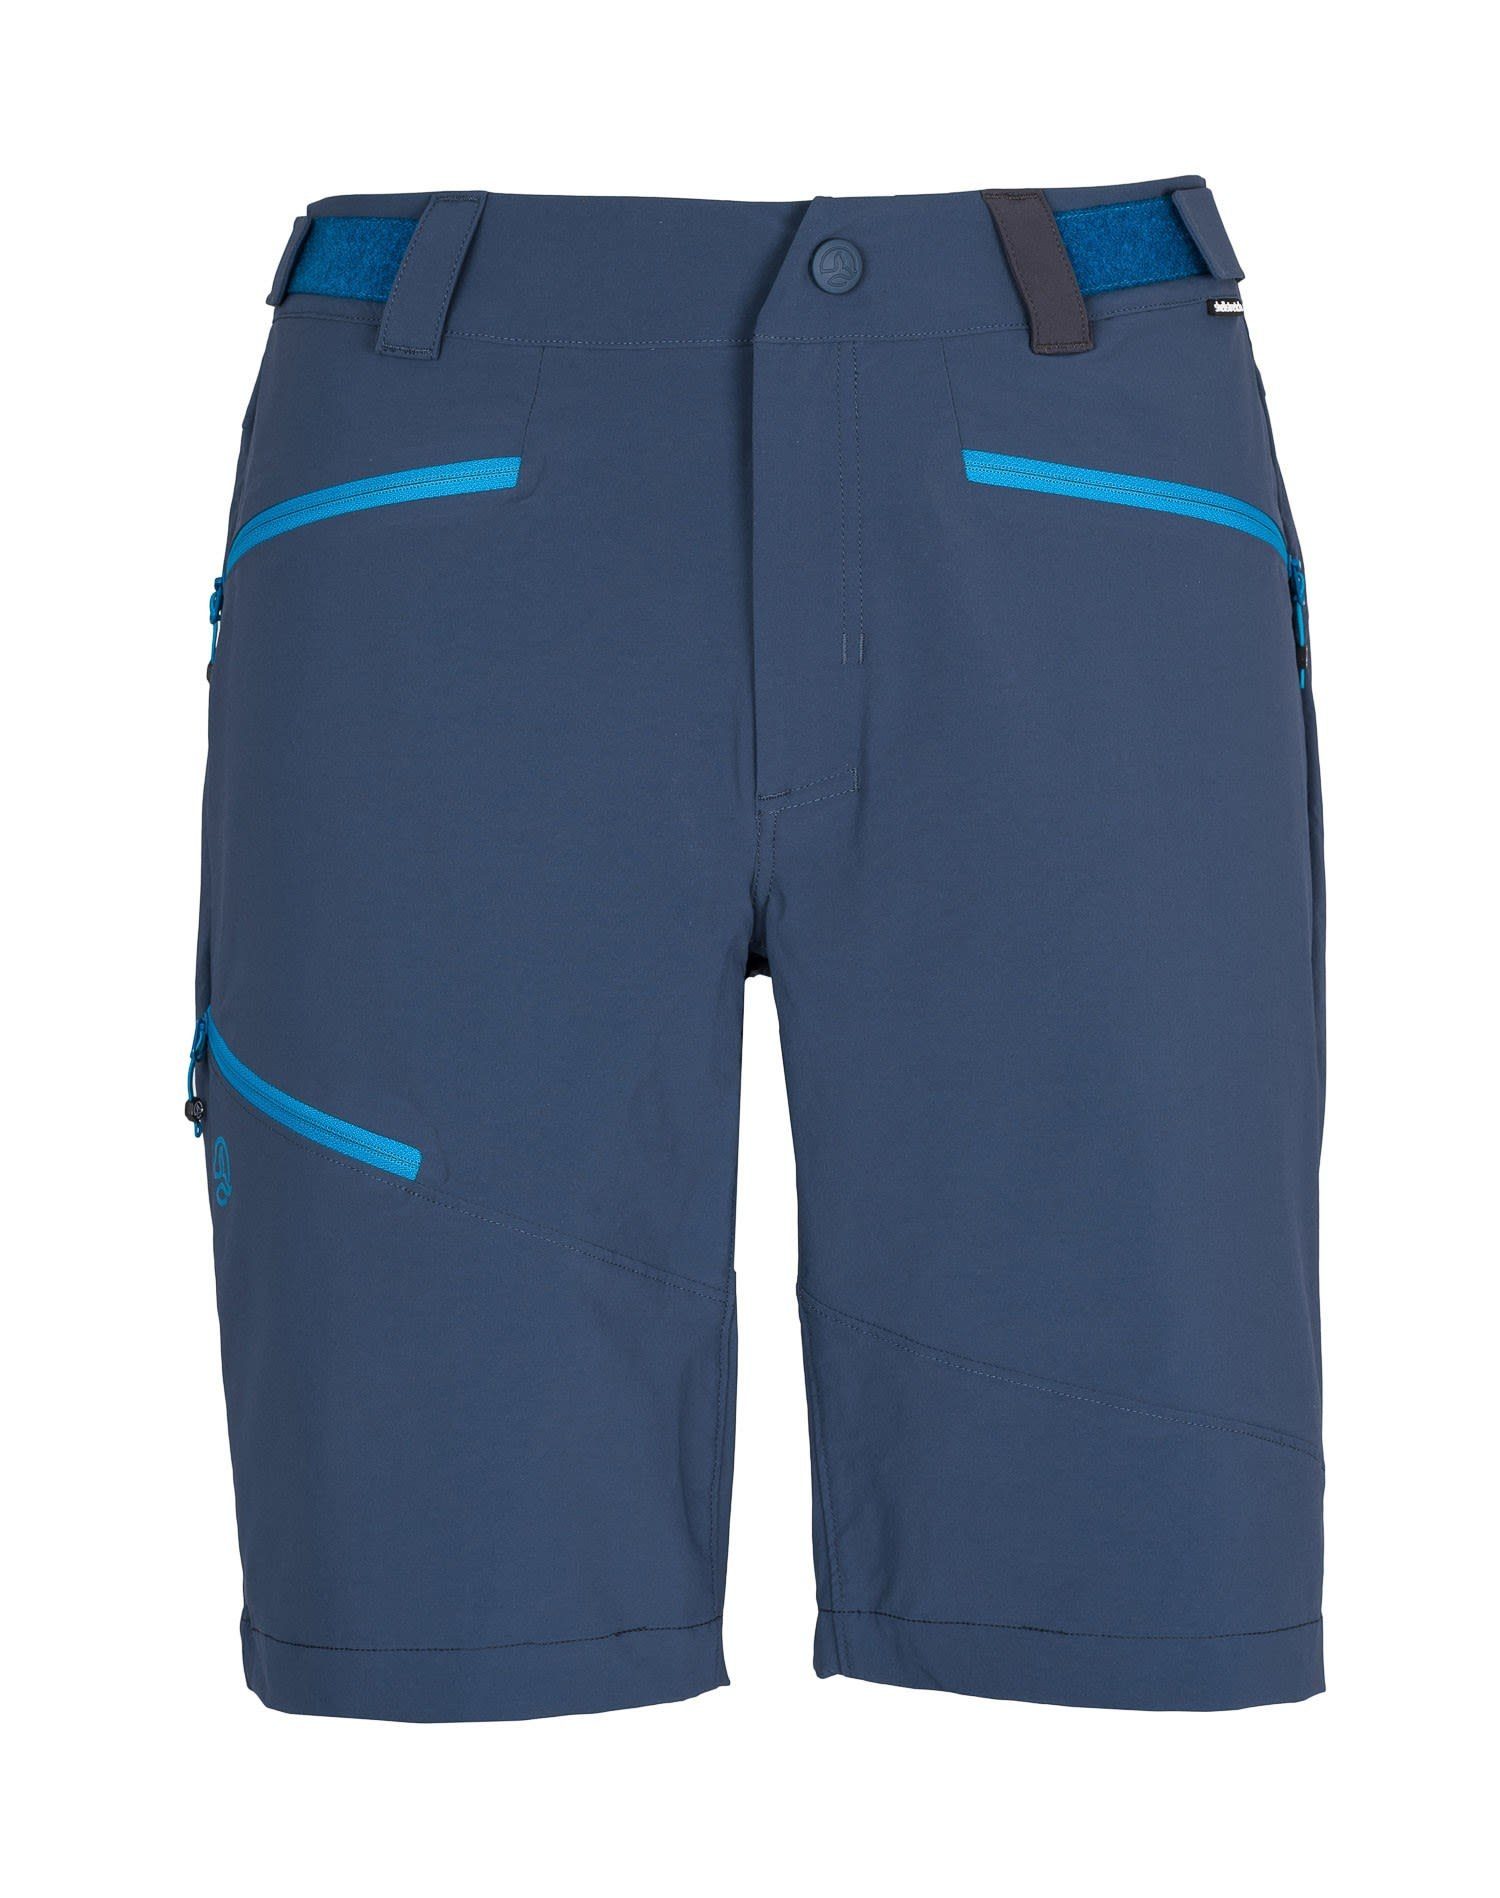 TERNUA Strandshorts Ternua M Wing Herren Teal Blue Rotor Bermuda Shorts